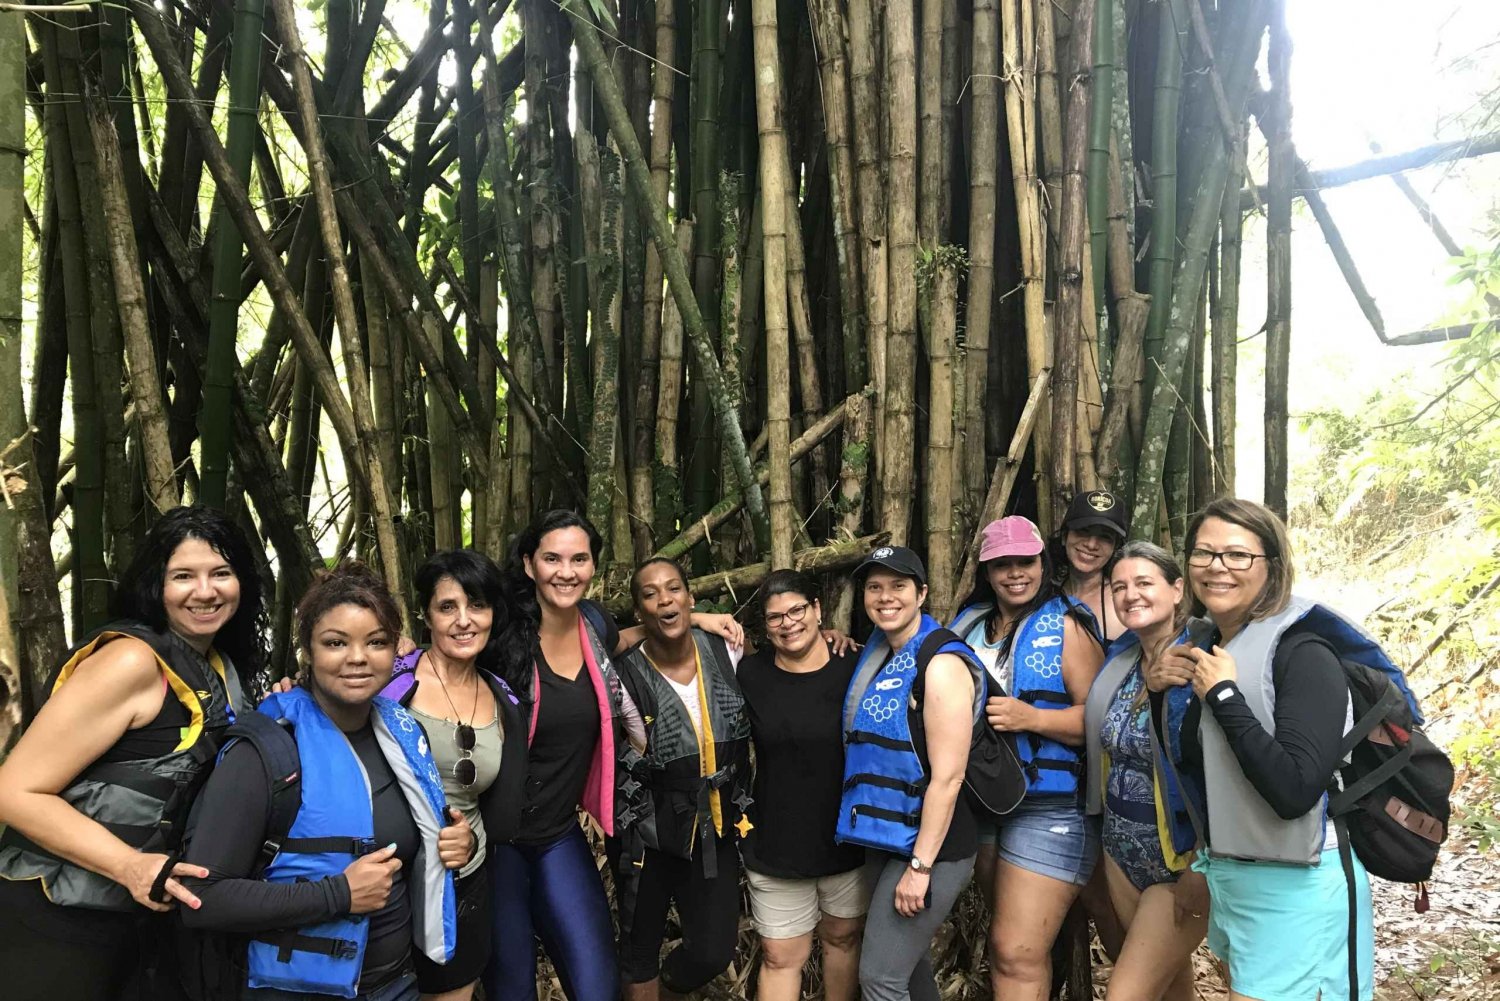 El Yunque Rainforest: Hike and Waterslide Adventure